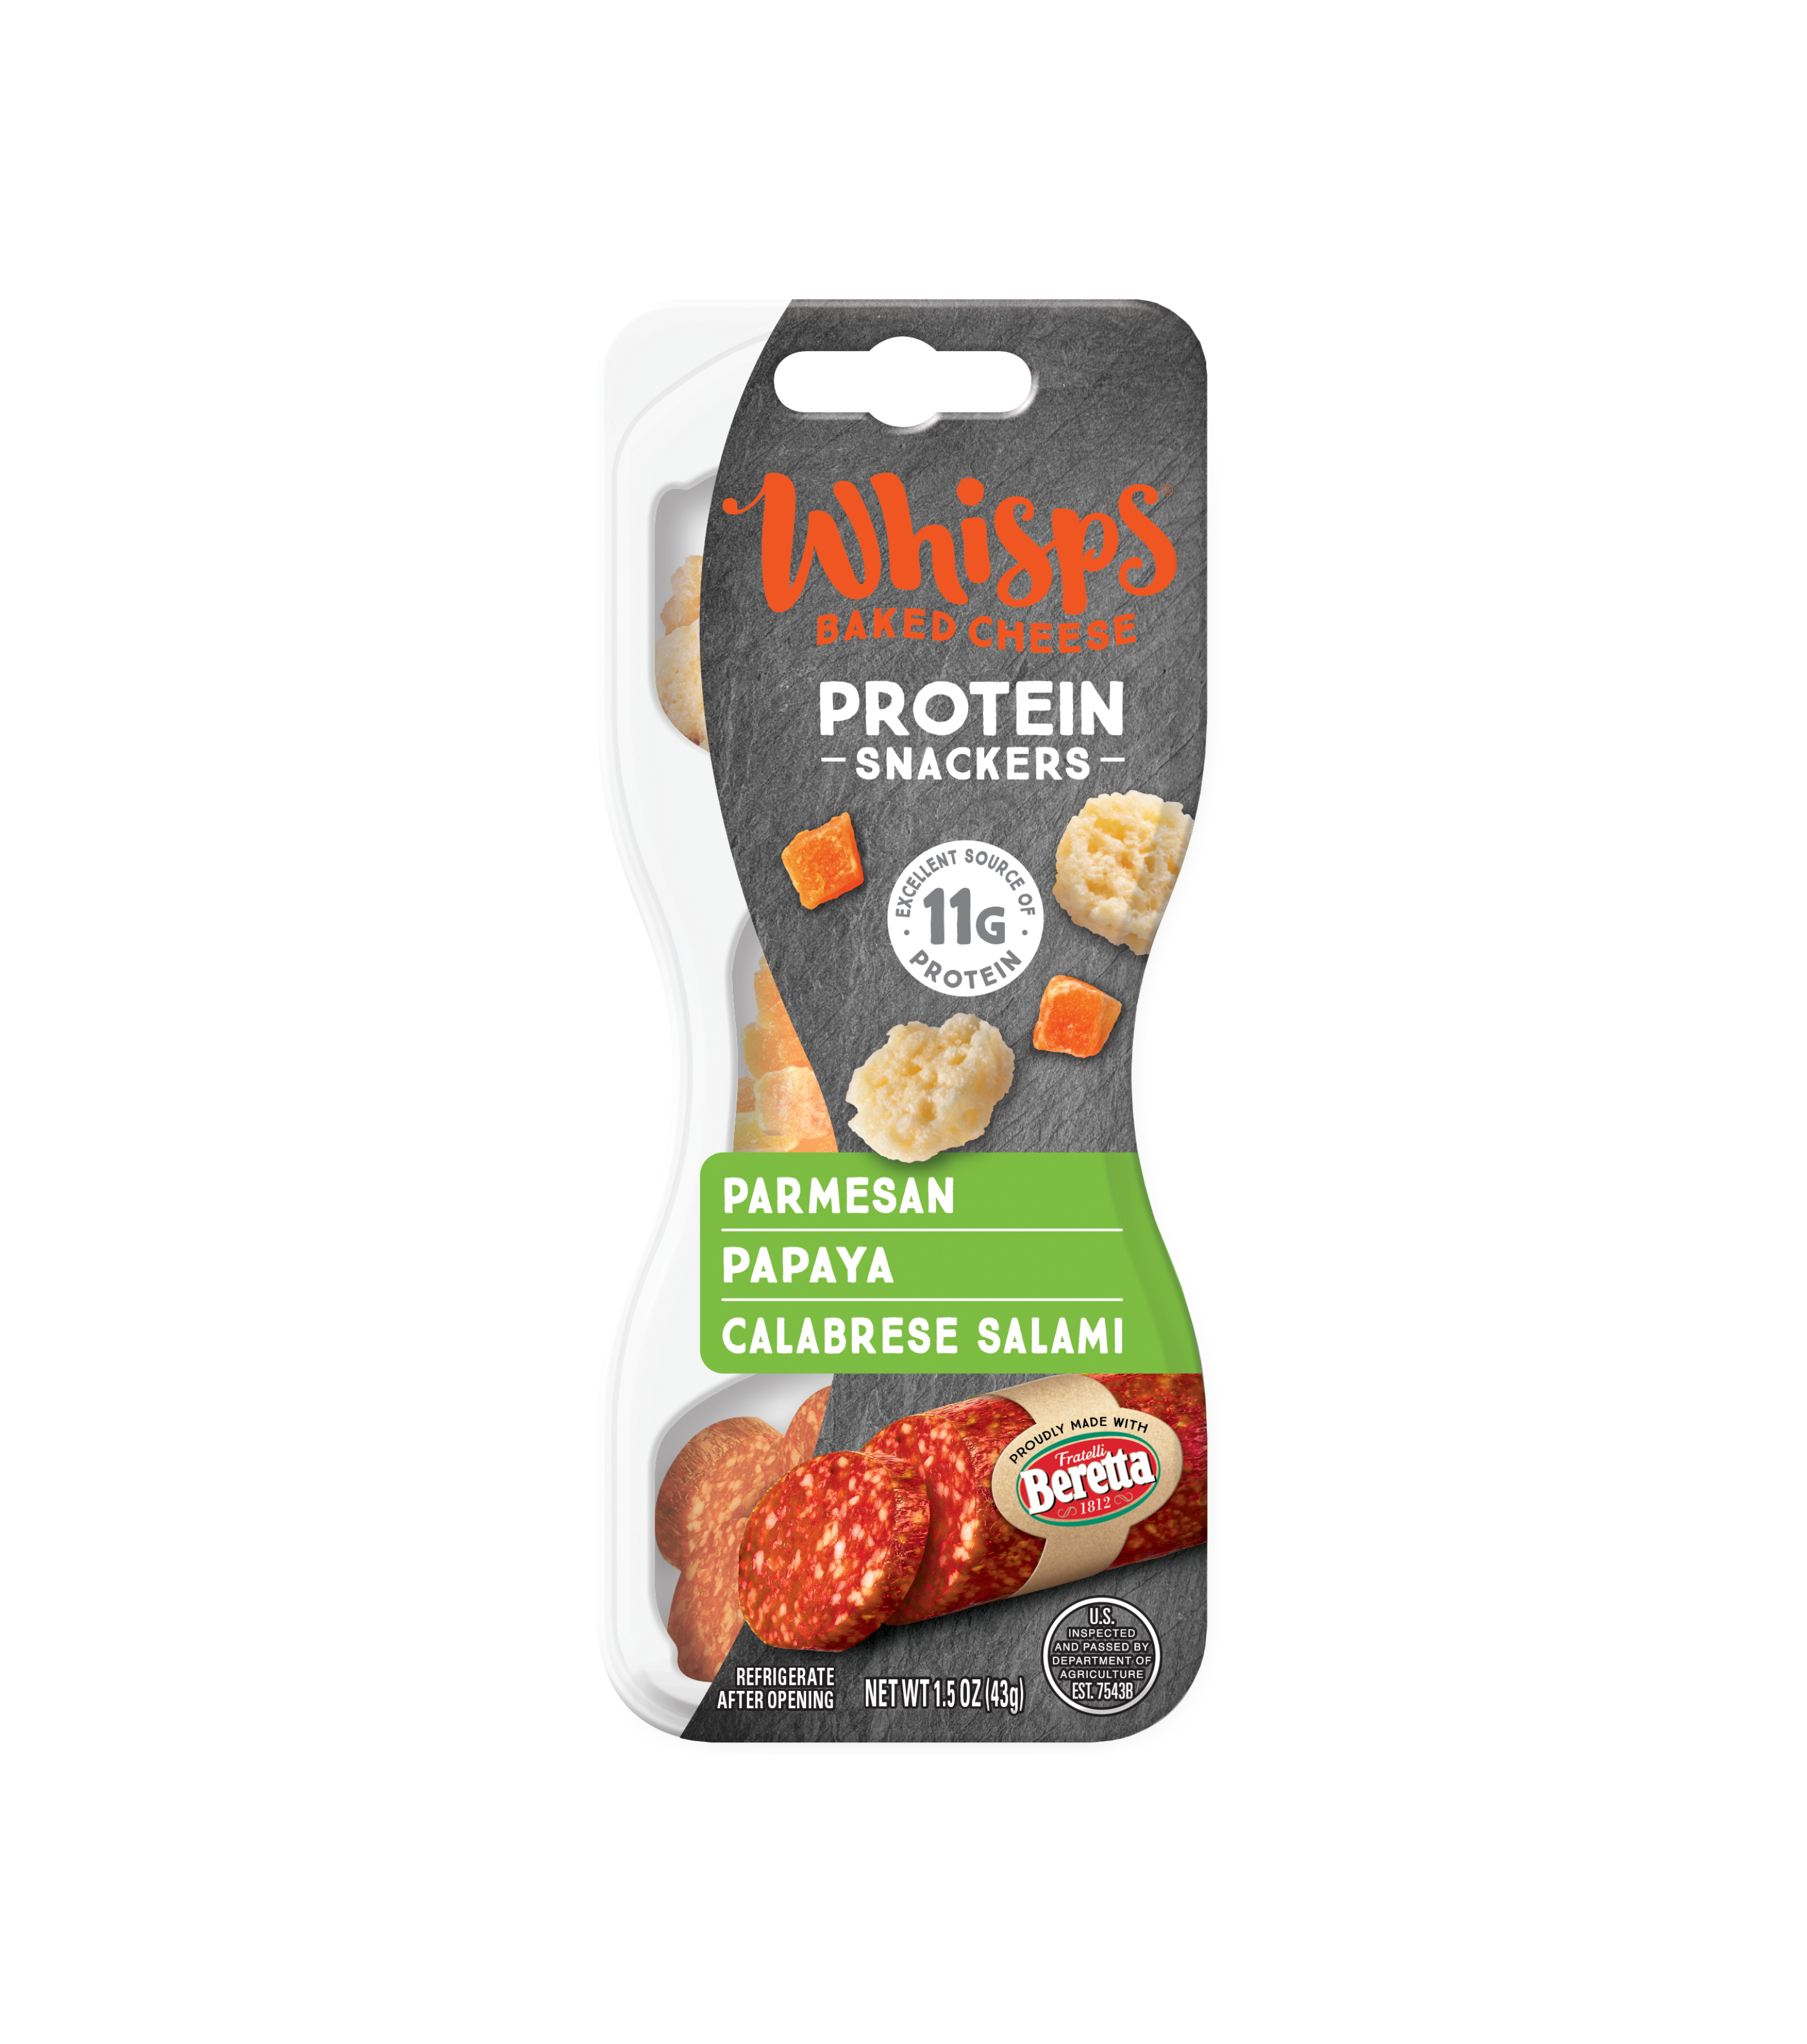 Parmesan, Papaya, Calabrese Salami Protein Snackers